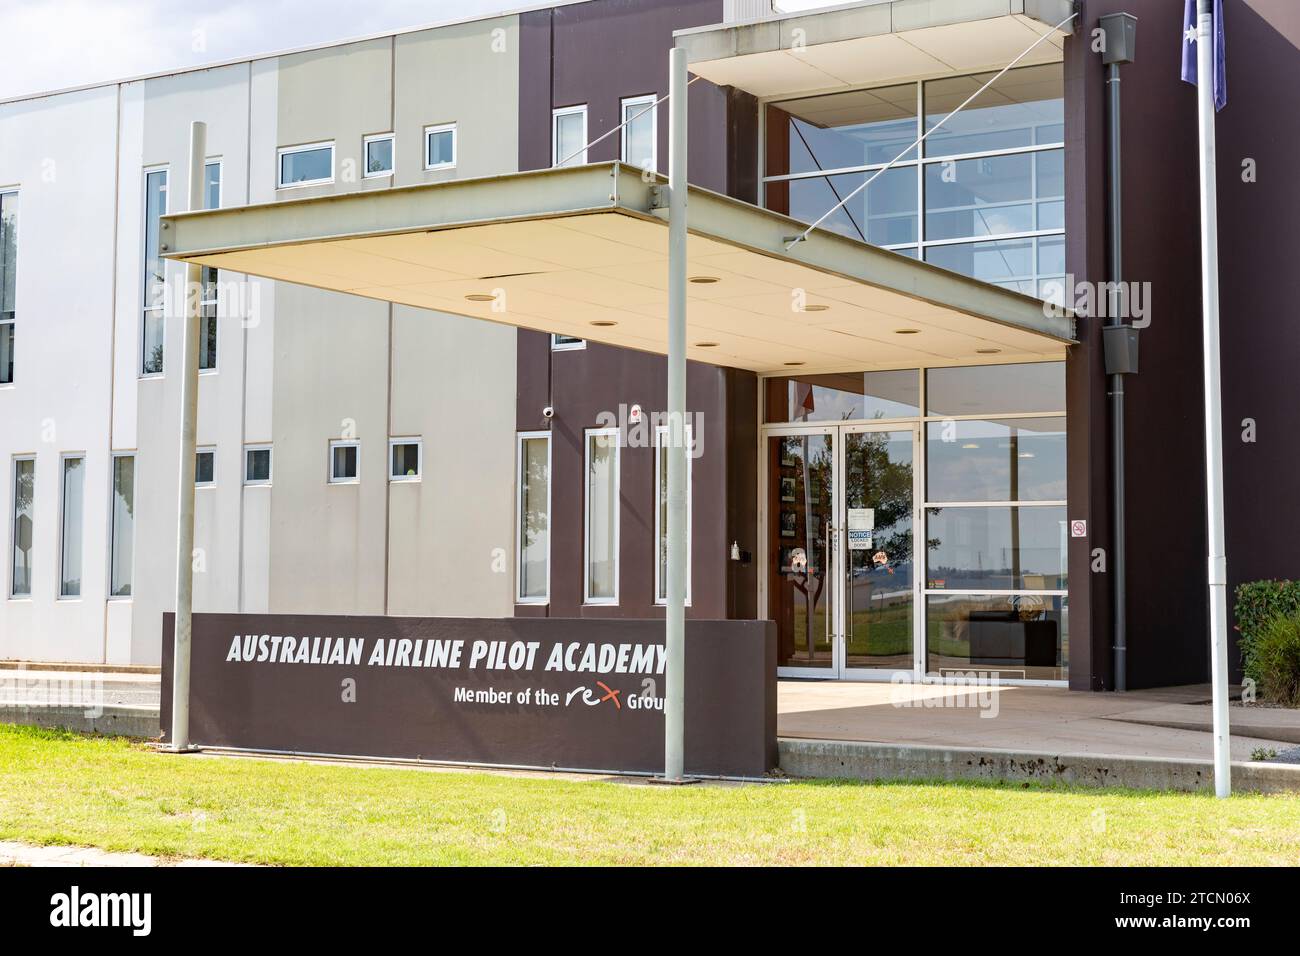 Australian airline pilot academy Stock Photo